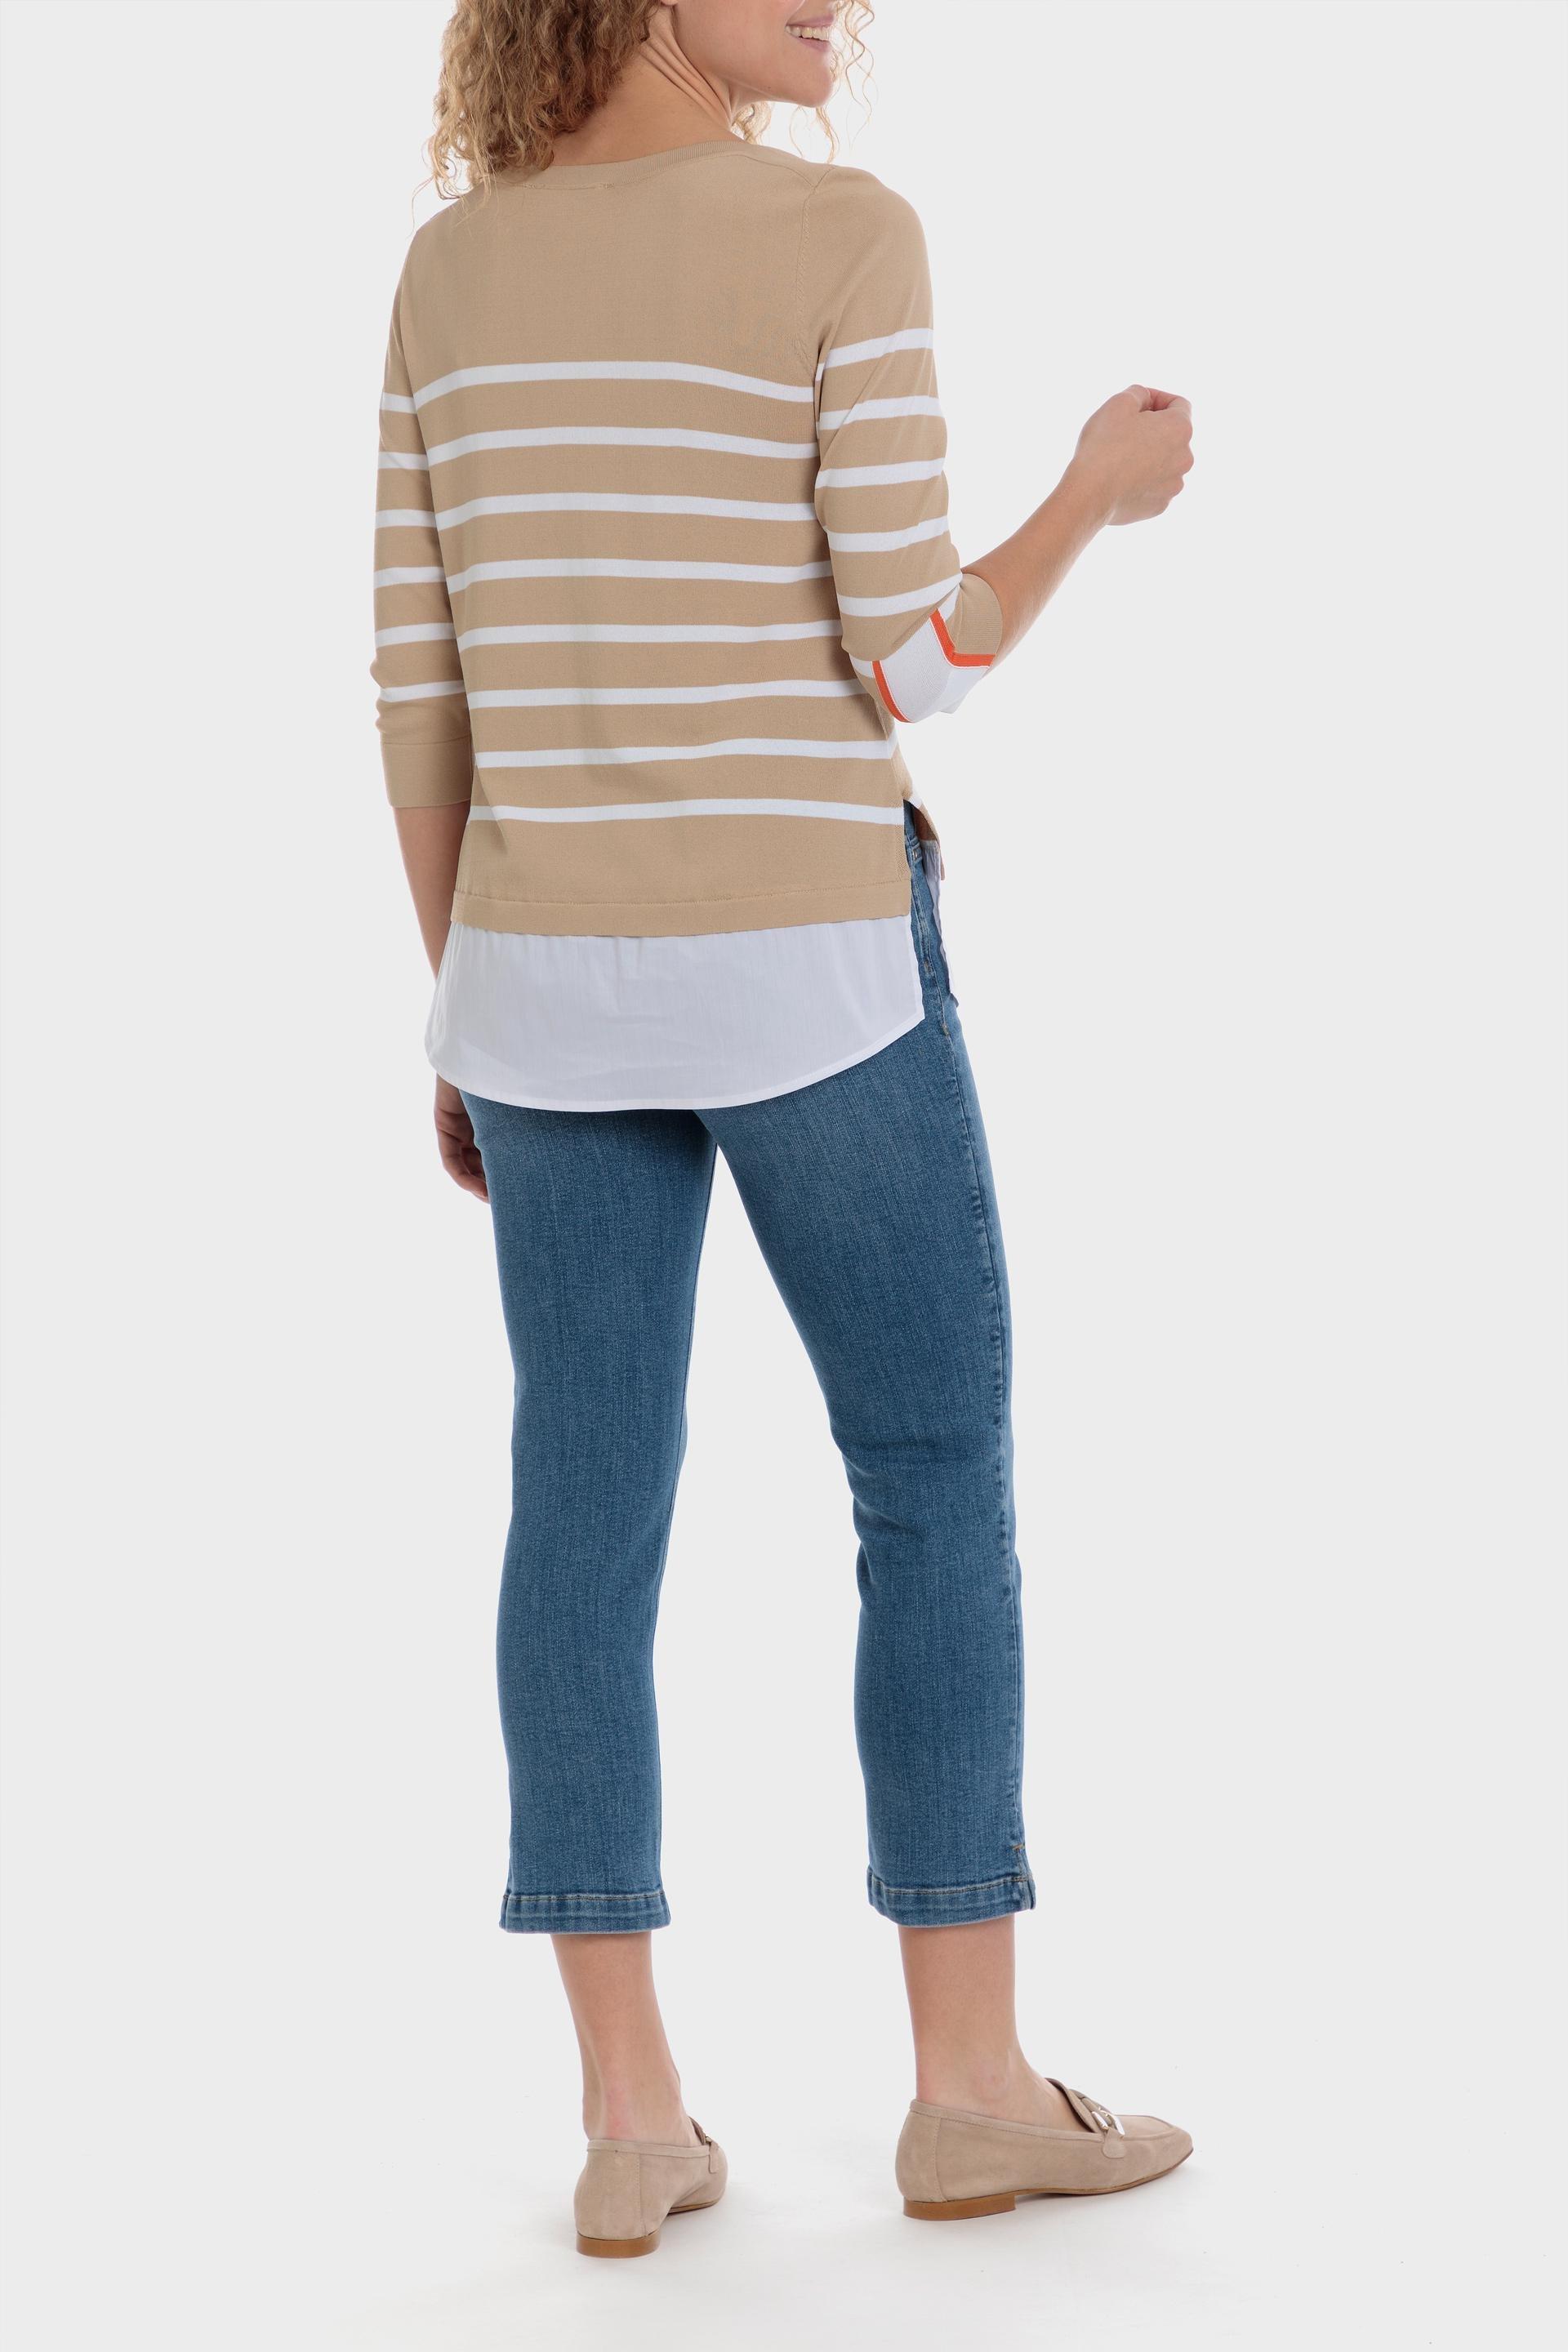 Punt Roma - Beige Striped Sweater